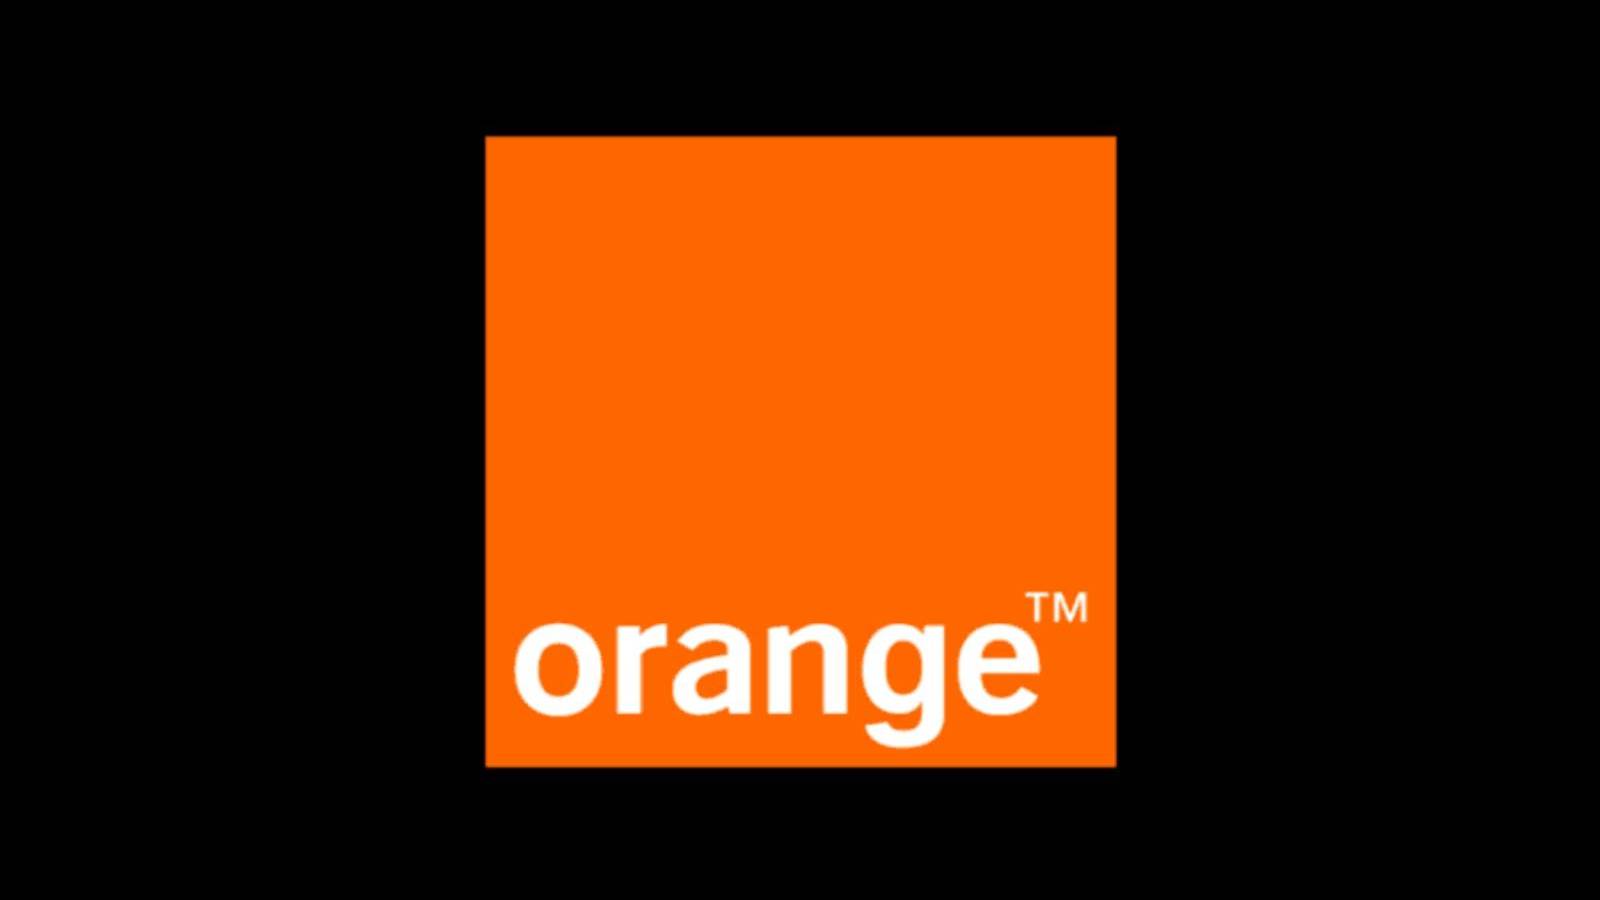 Information Orange miljoner kunder gratis veckobonusar